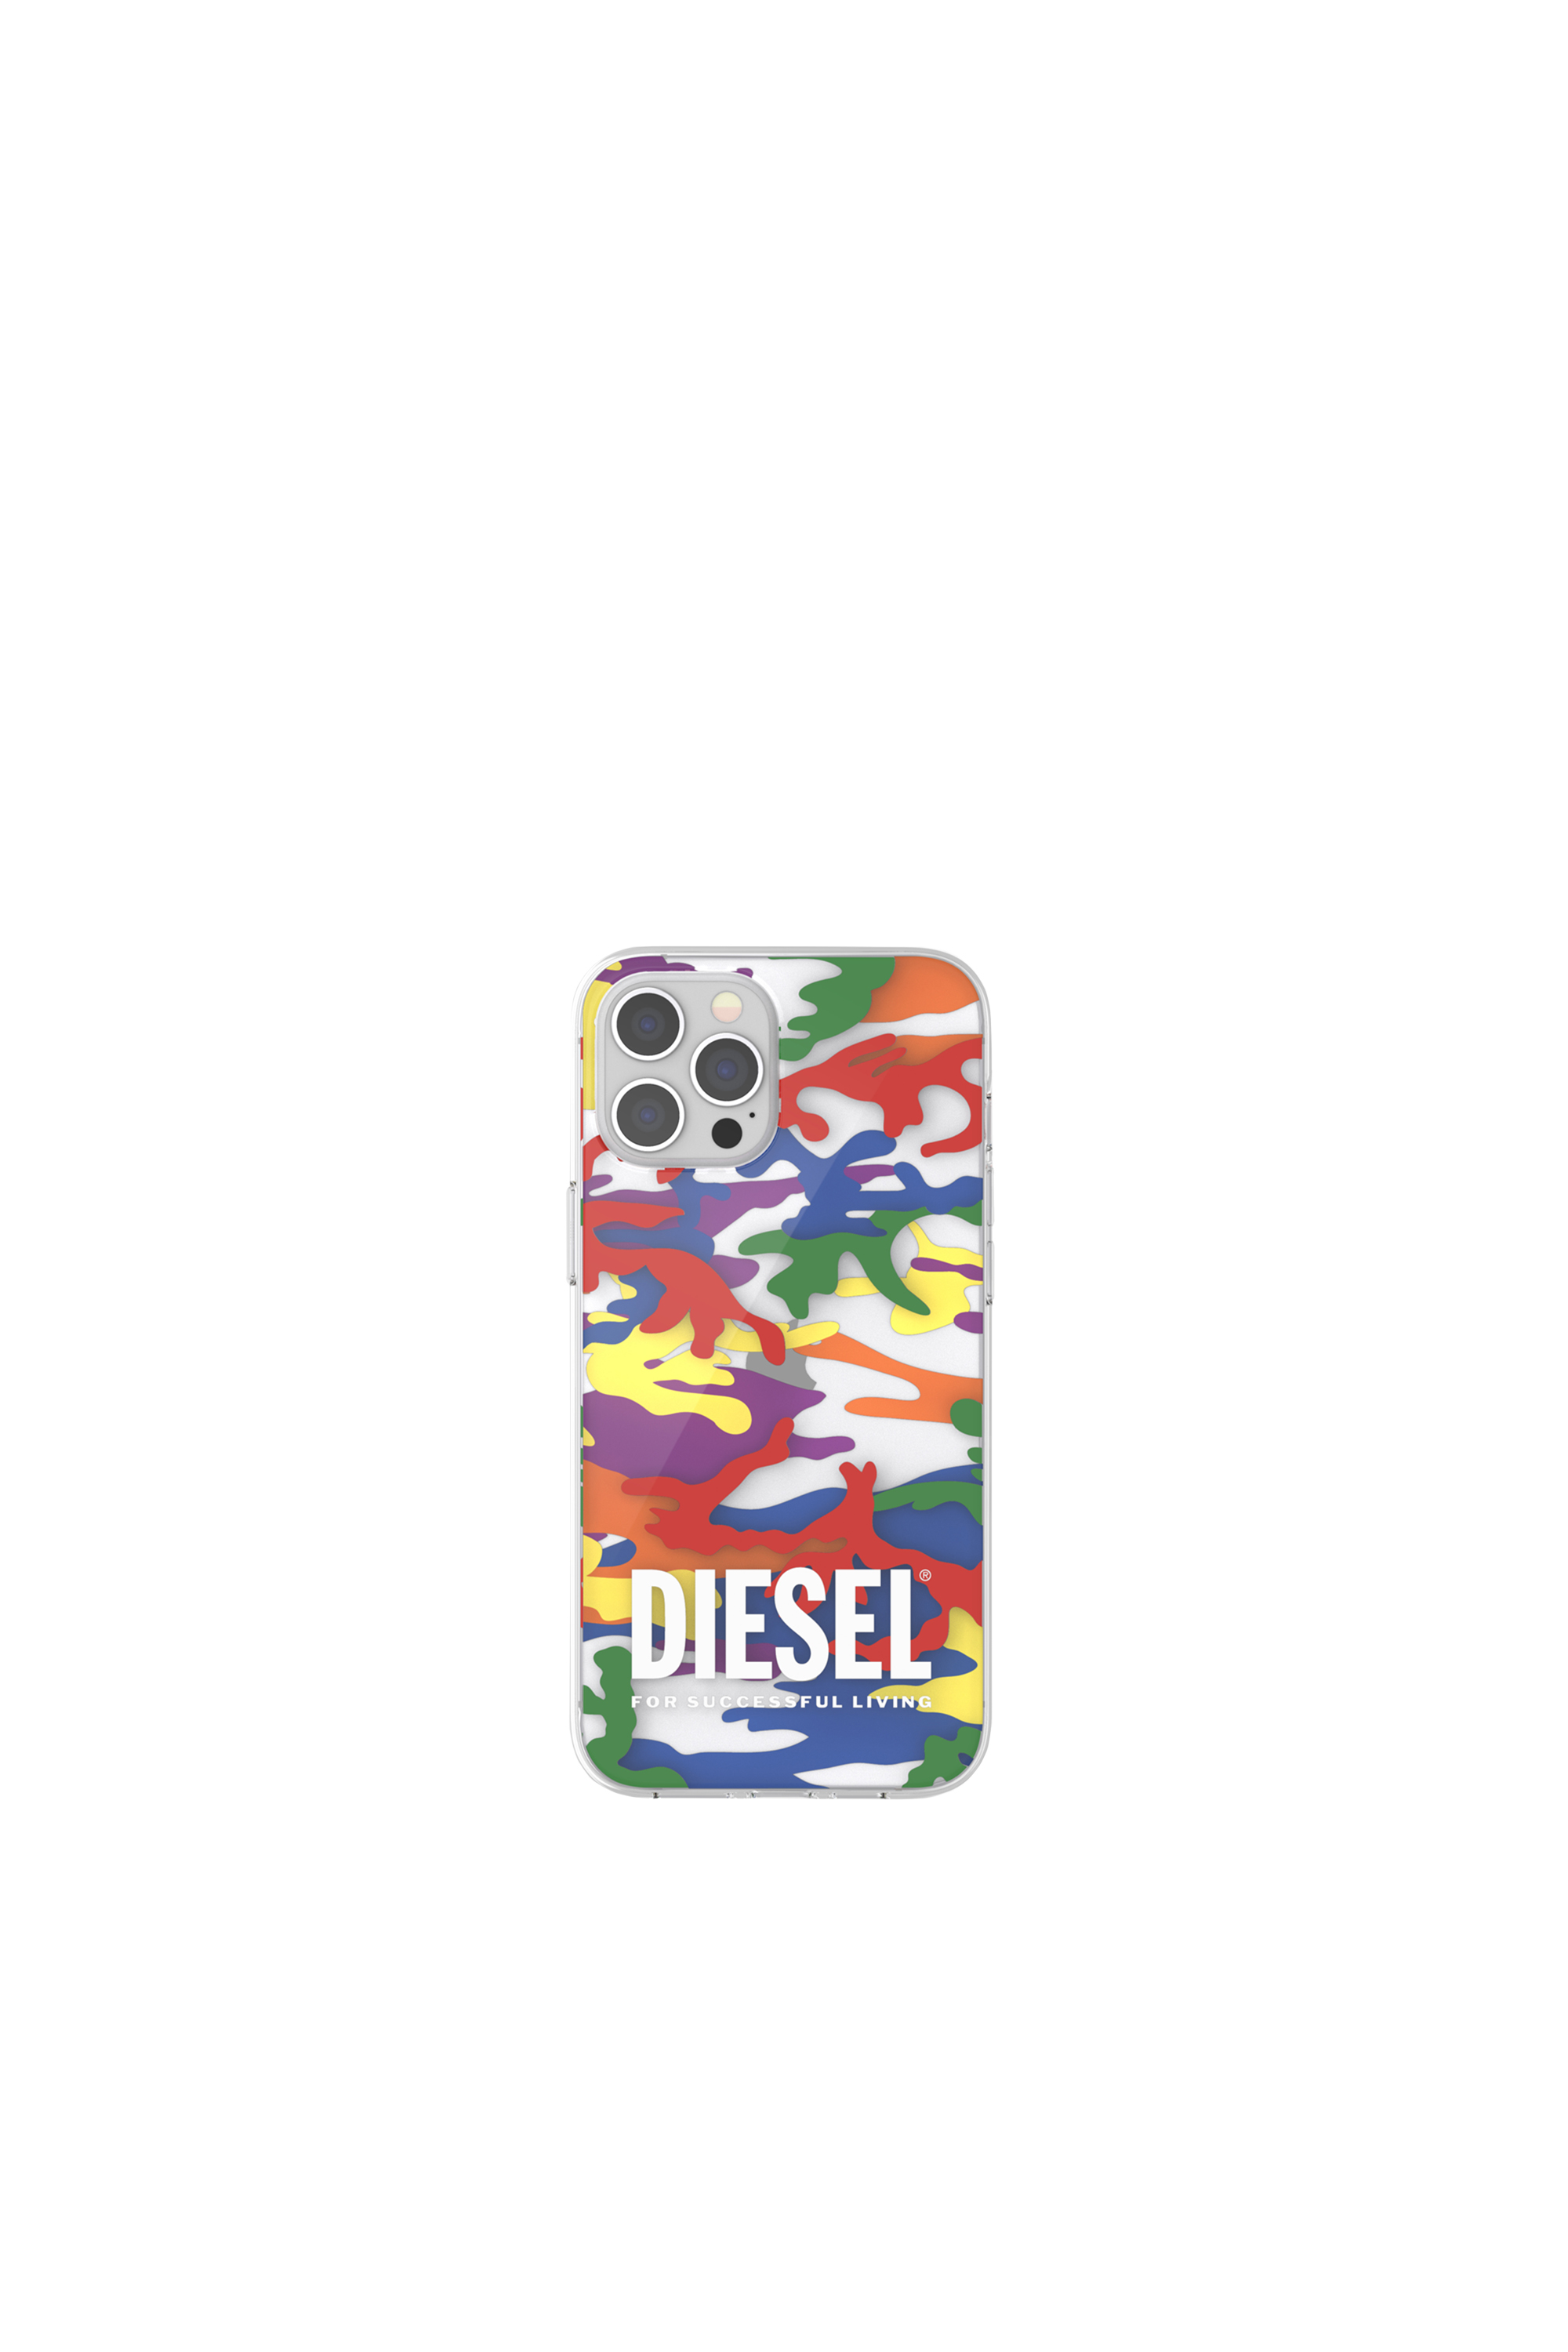 Diesel - 44333  STANDARD CASES, Bunt - Image 2